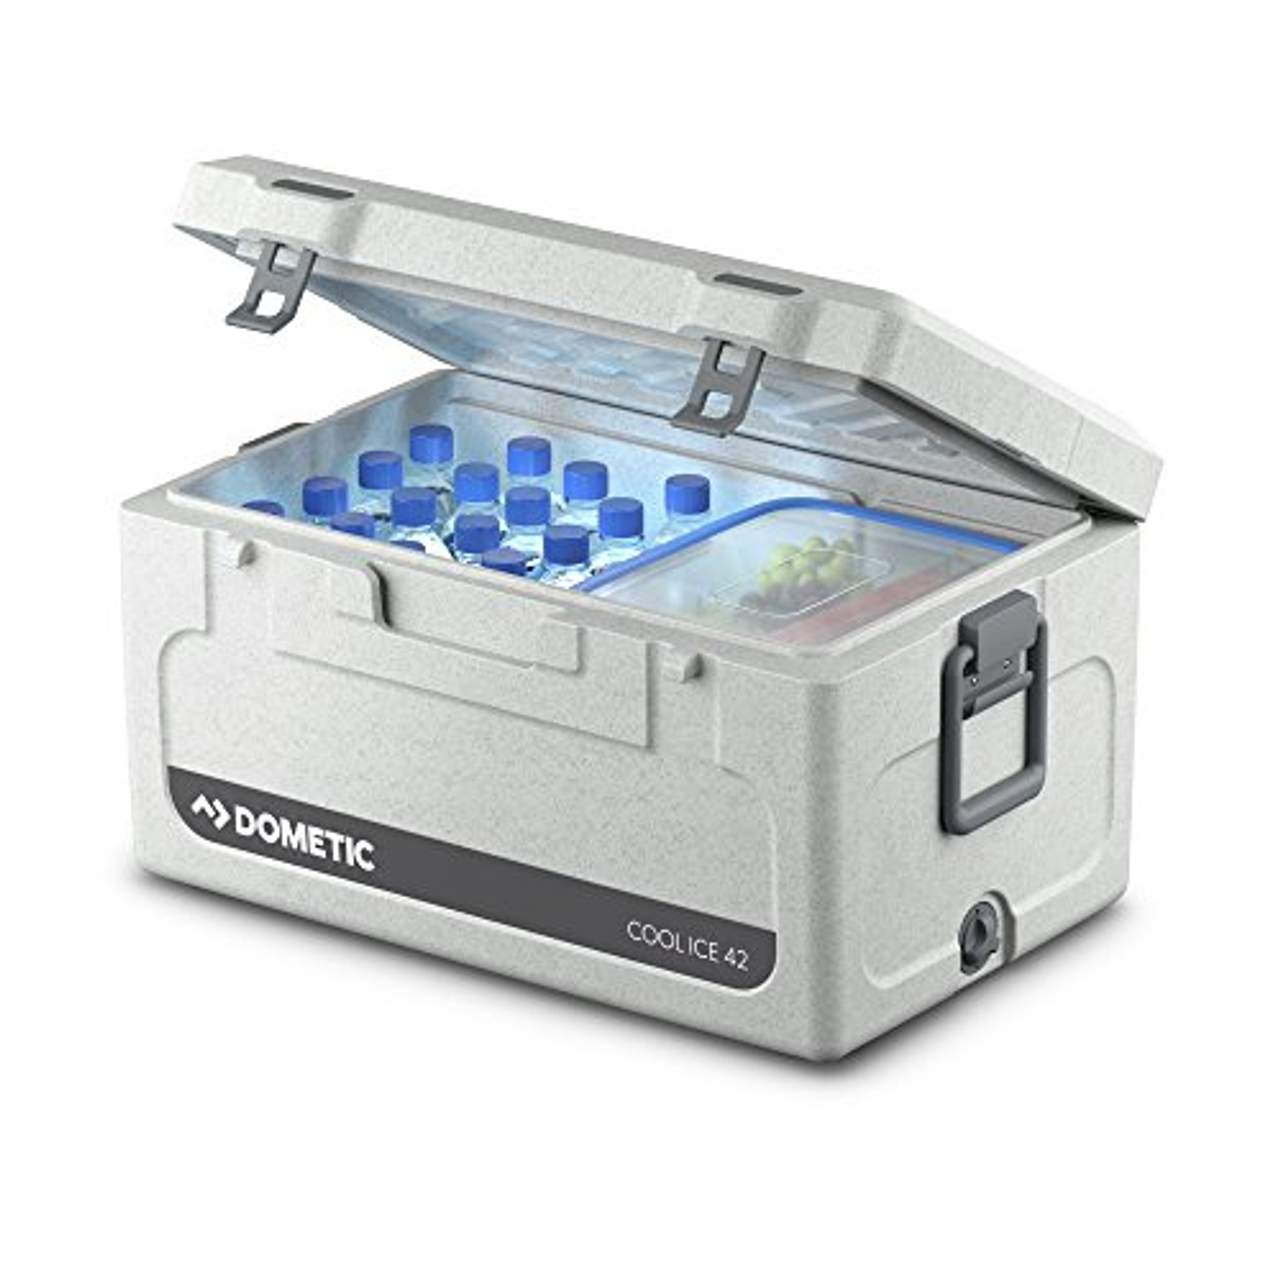 DOMETIC Cool-Ice CI 42 tragbare Passiv-Kühlbox